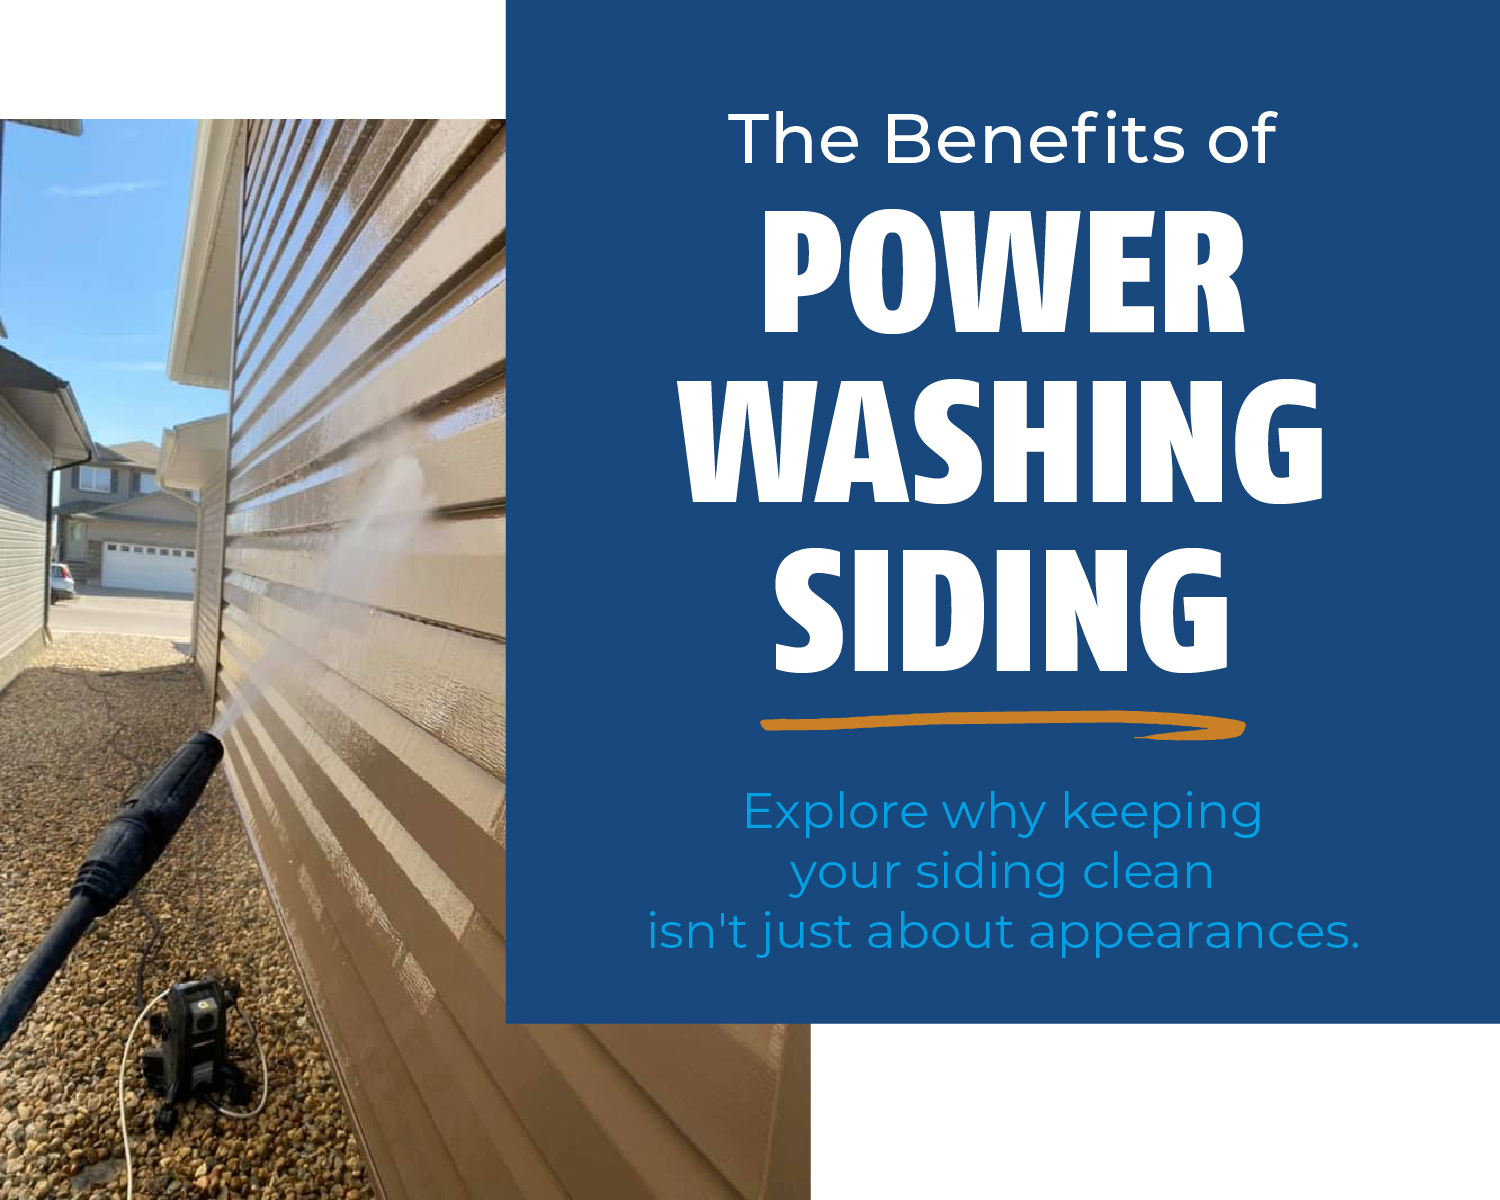 The Benefits of Power Washing Siding